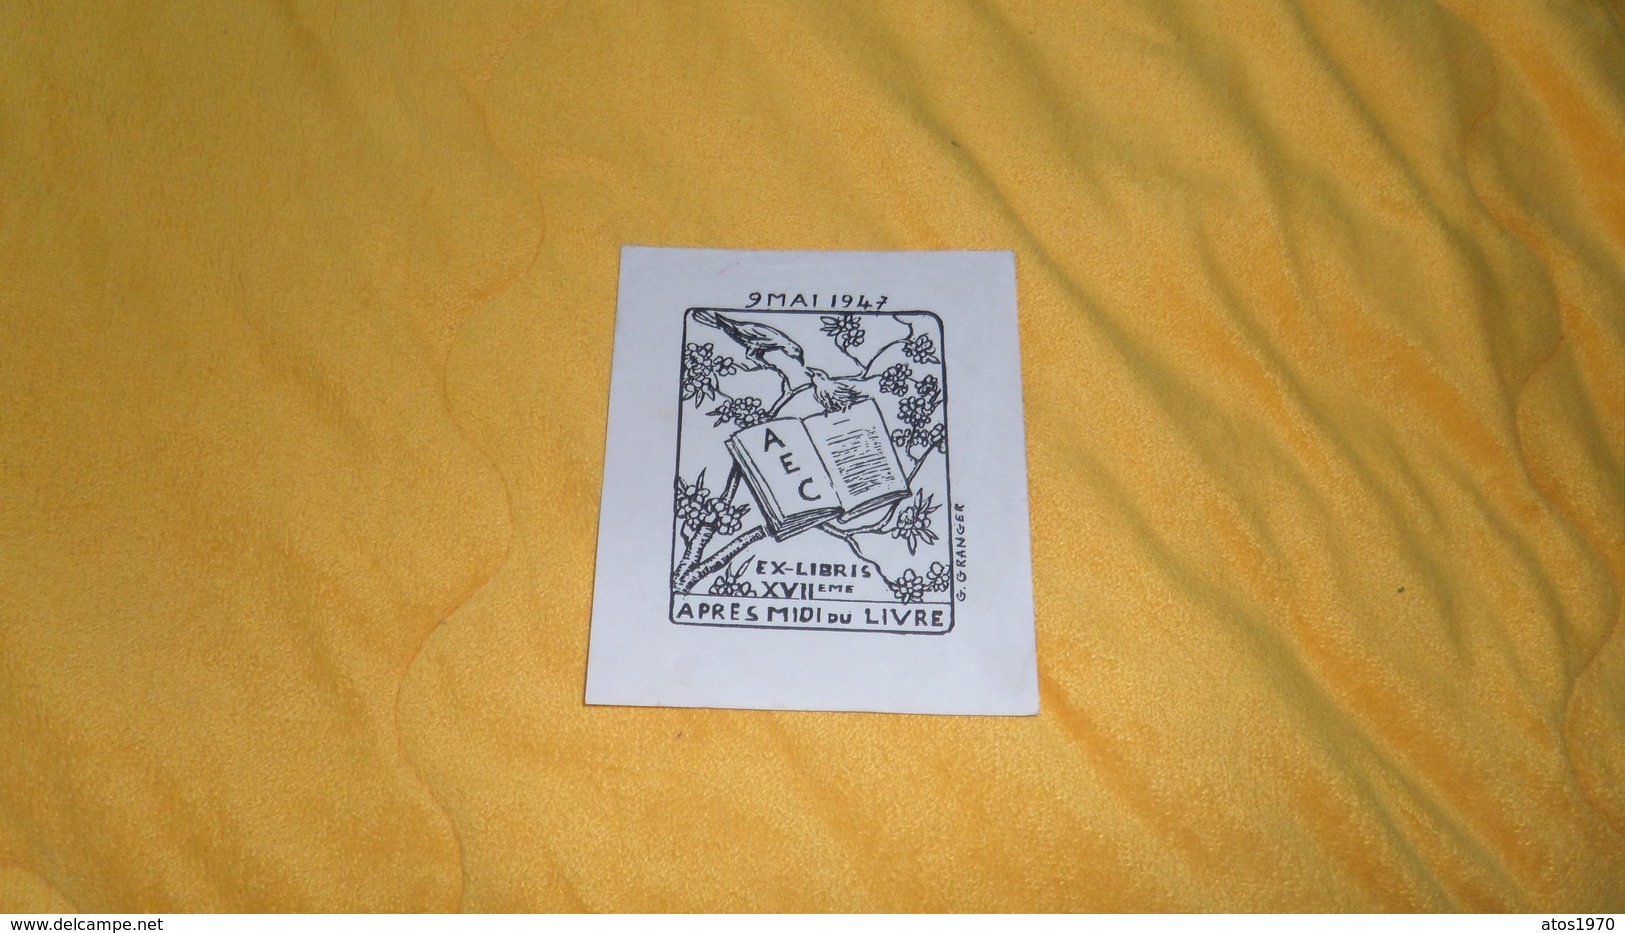 EX LIBRIS ANCIENNE DE 1947. / EX LIBRIS XVIIe APRES MIDI DU LIVRE. 9 MAI 1947 AEC. / G. GRANGER. - Bookplates